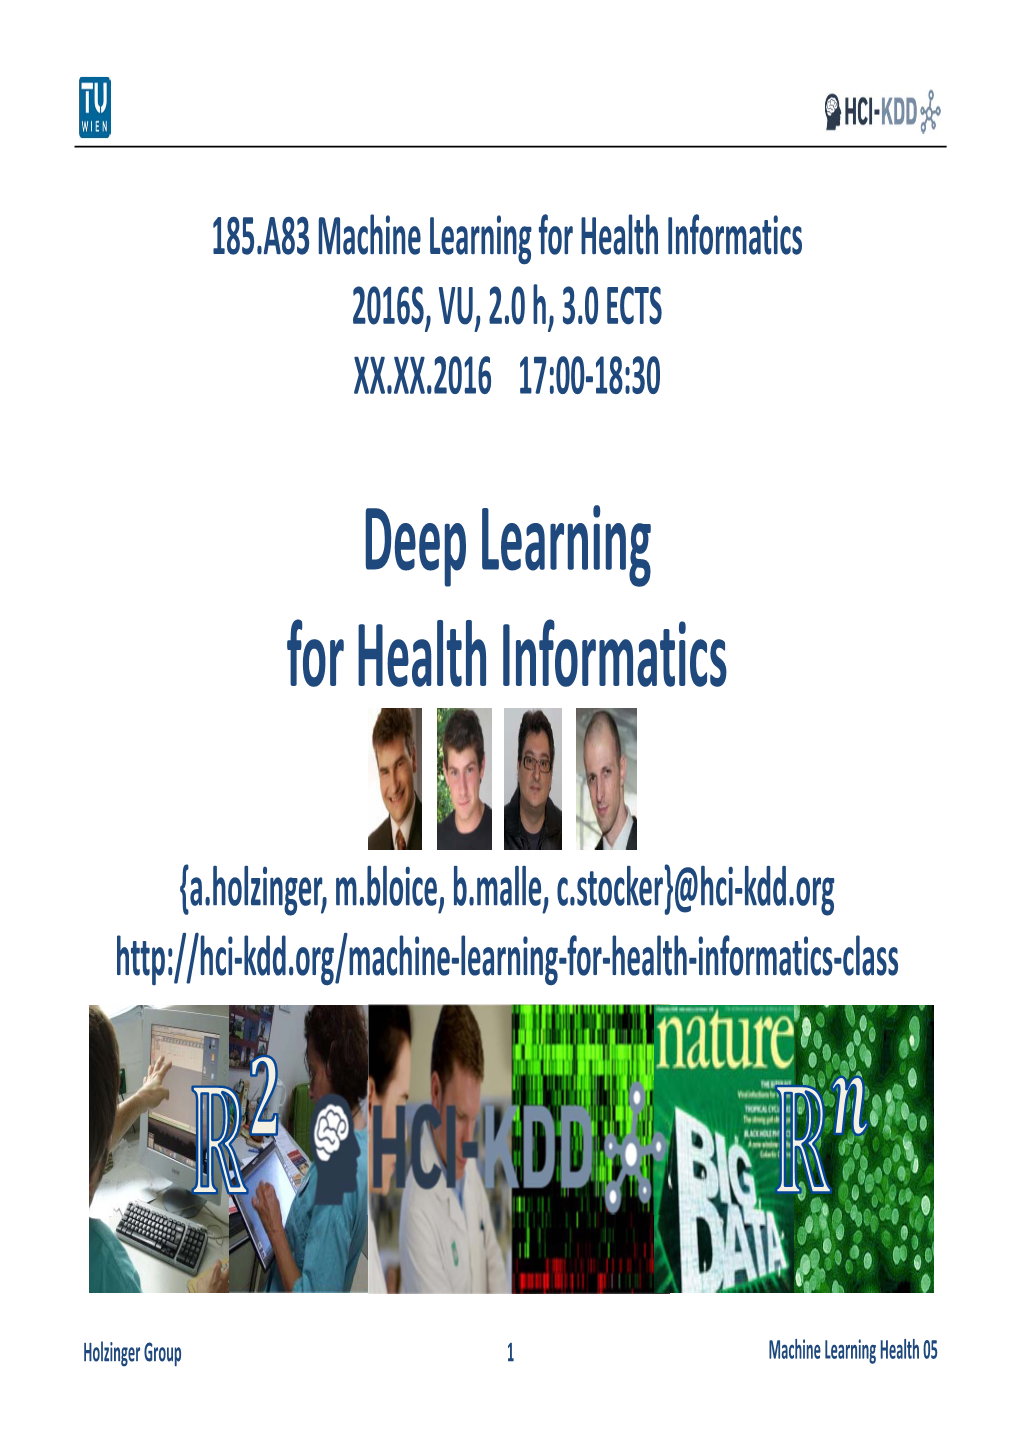 Deep Learning for Health Informatics